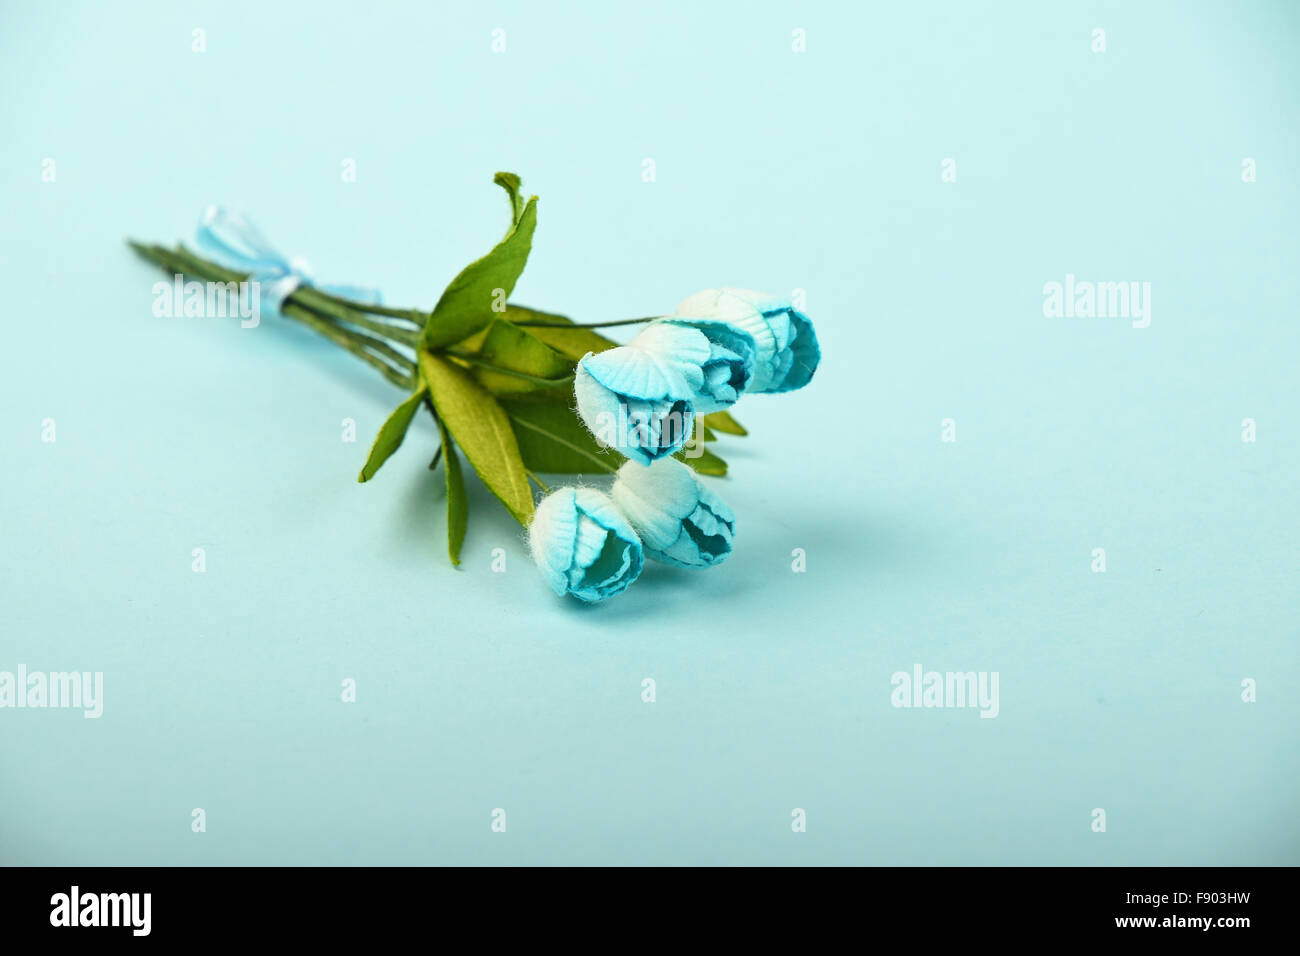 Un pequeño papel de morera tulipanes ramo de flores pequeñas sobre fondo azul de licitación Foto de stock